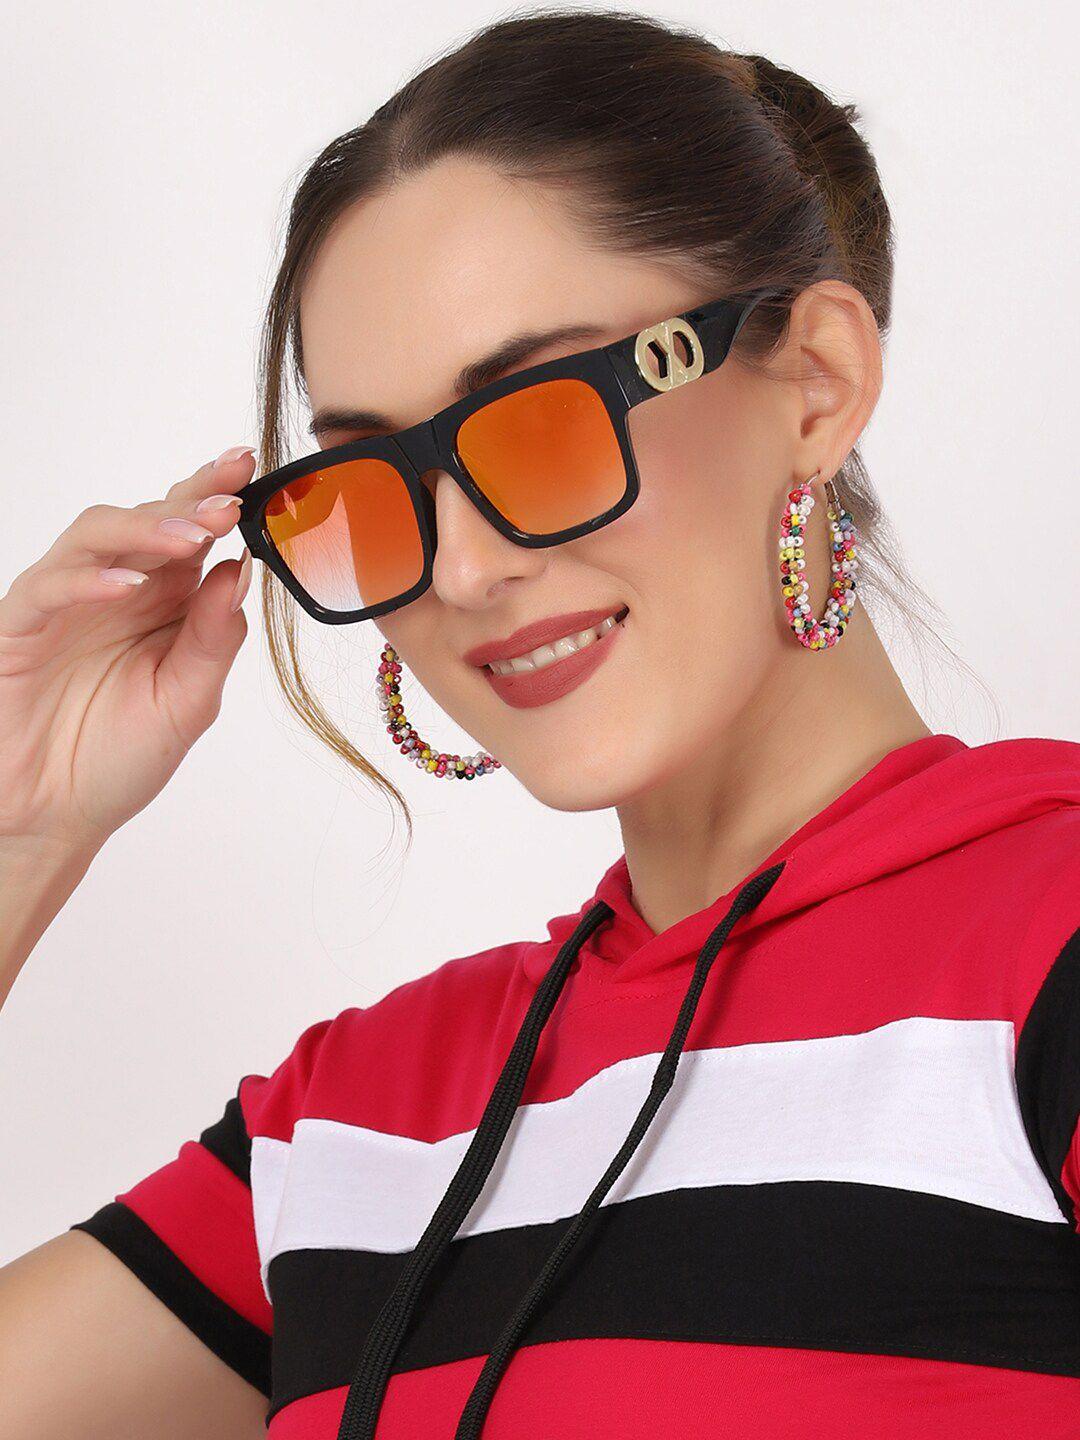 swiss-design-lens-&-wayfarer-sunglasses-with-uv-protected-lens-sdgsw-20219-07